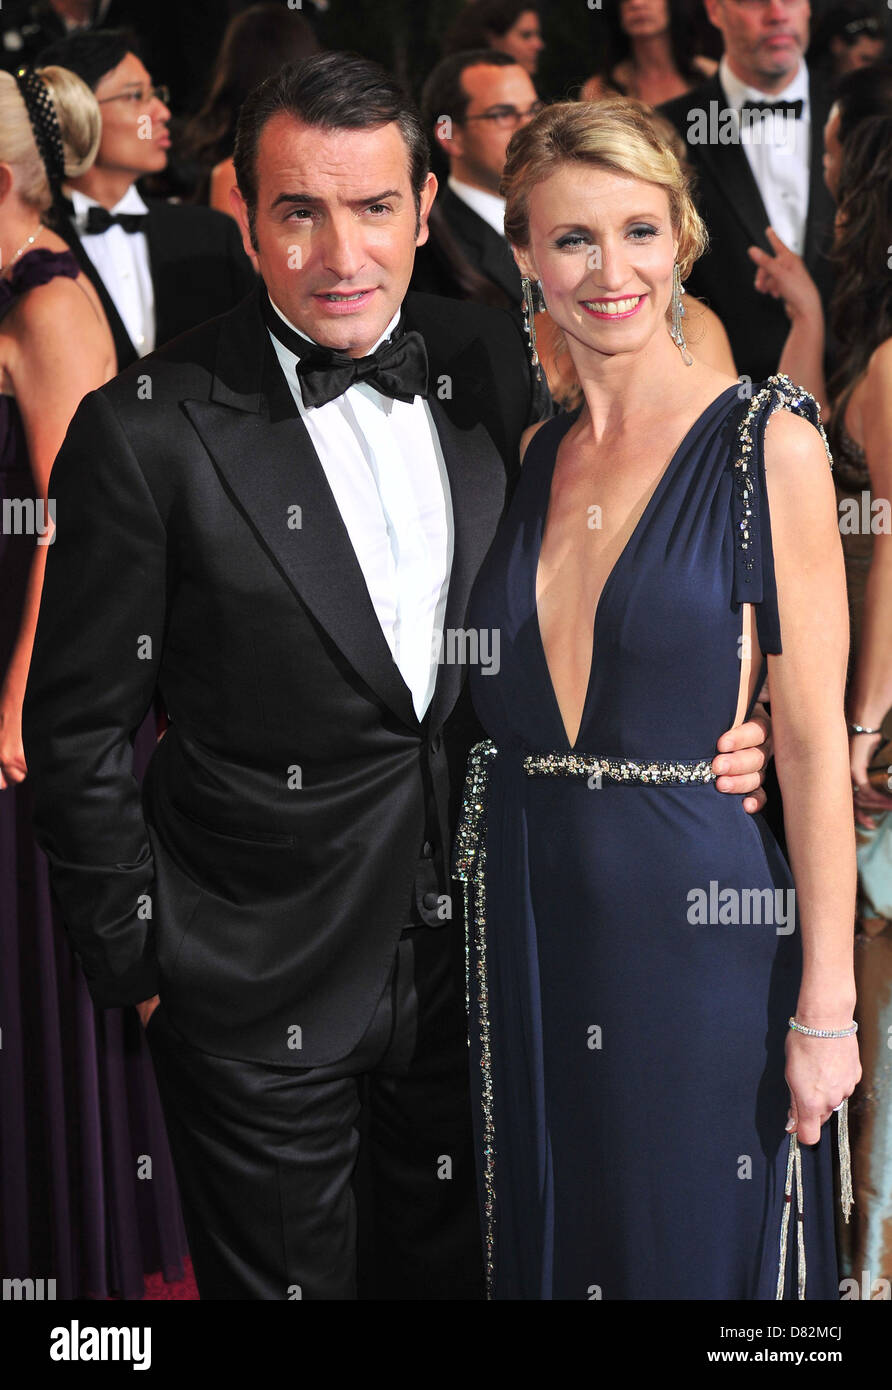 Jean Dujardin and his wife Alexandra Lamy 84th Annual Academy Awards  (Oscars) held at the Kodak Theatre - Arrivals Los Angeles Stock Photo -  Alamy